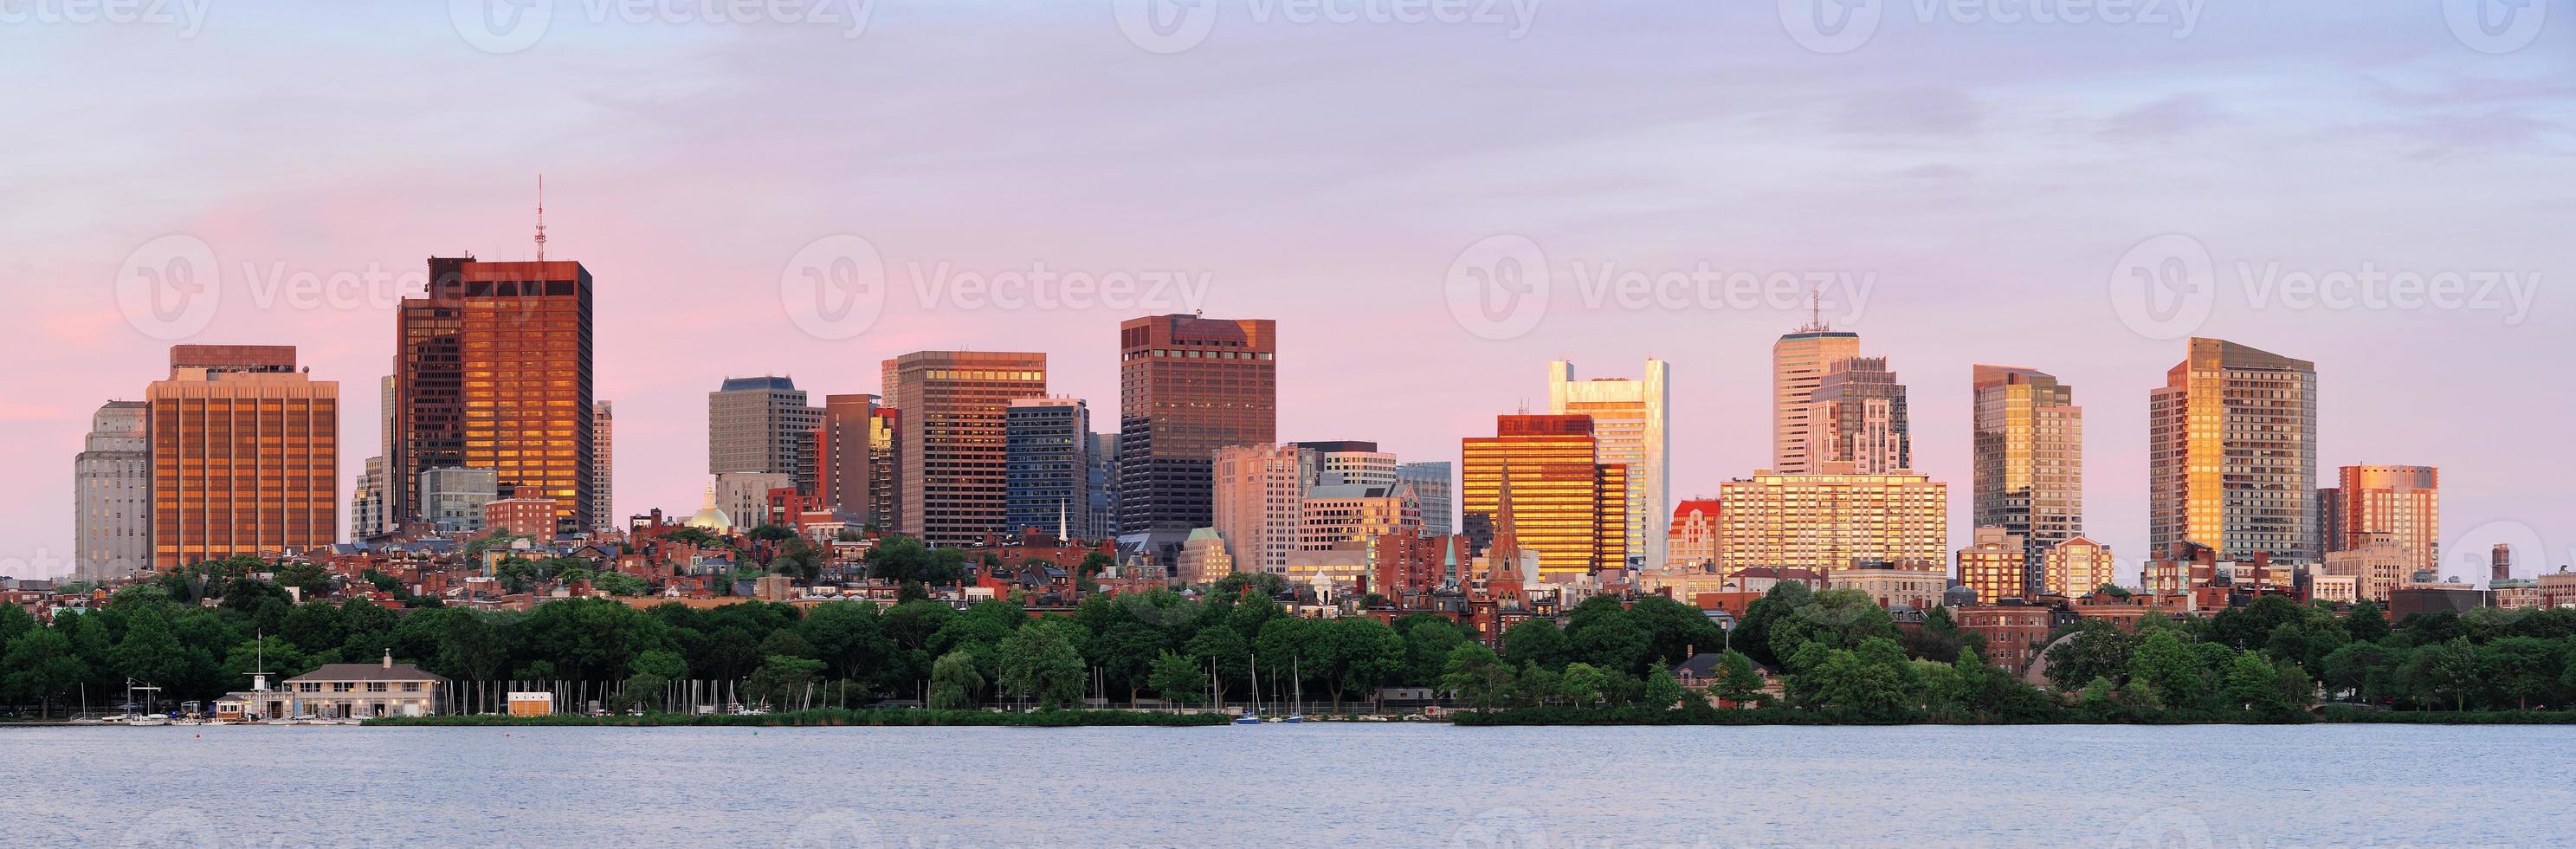 Skyline-Panorama von Boston foto